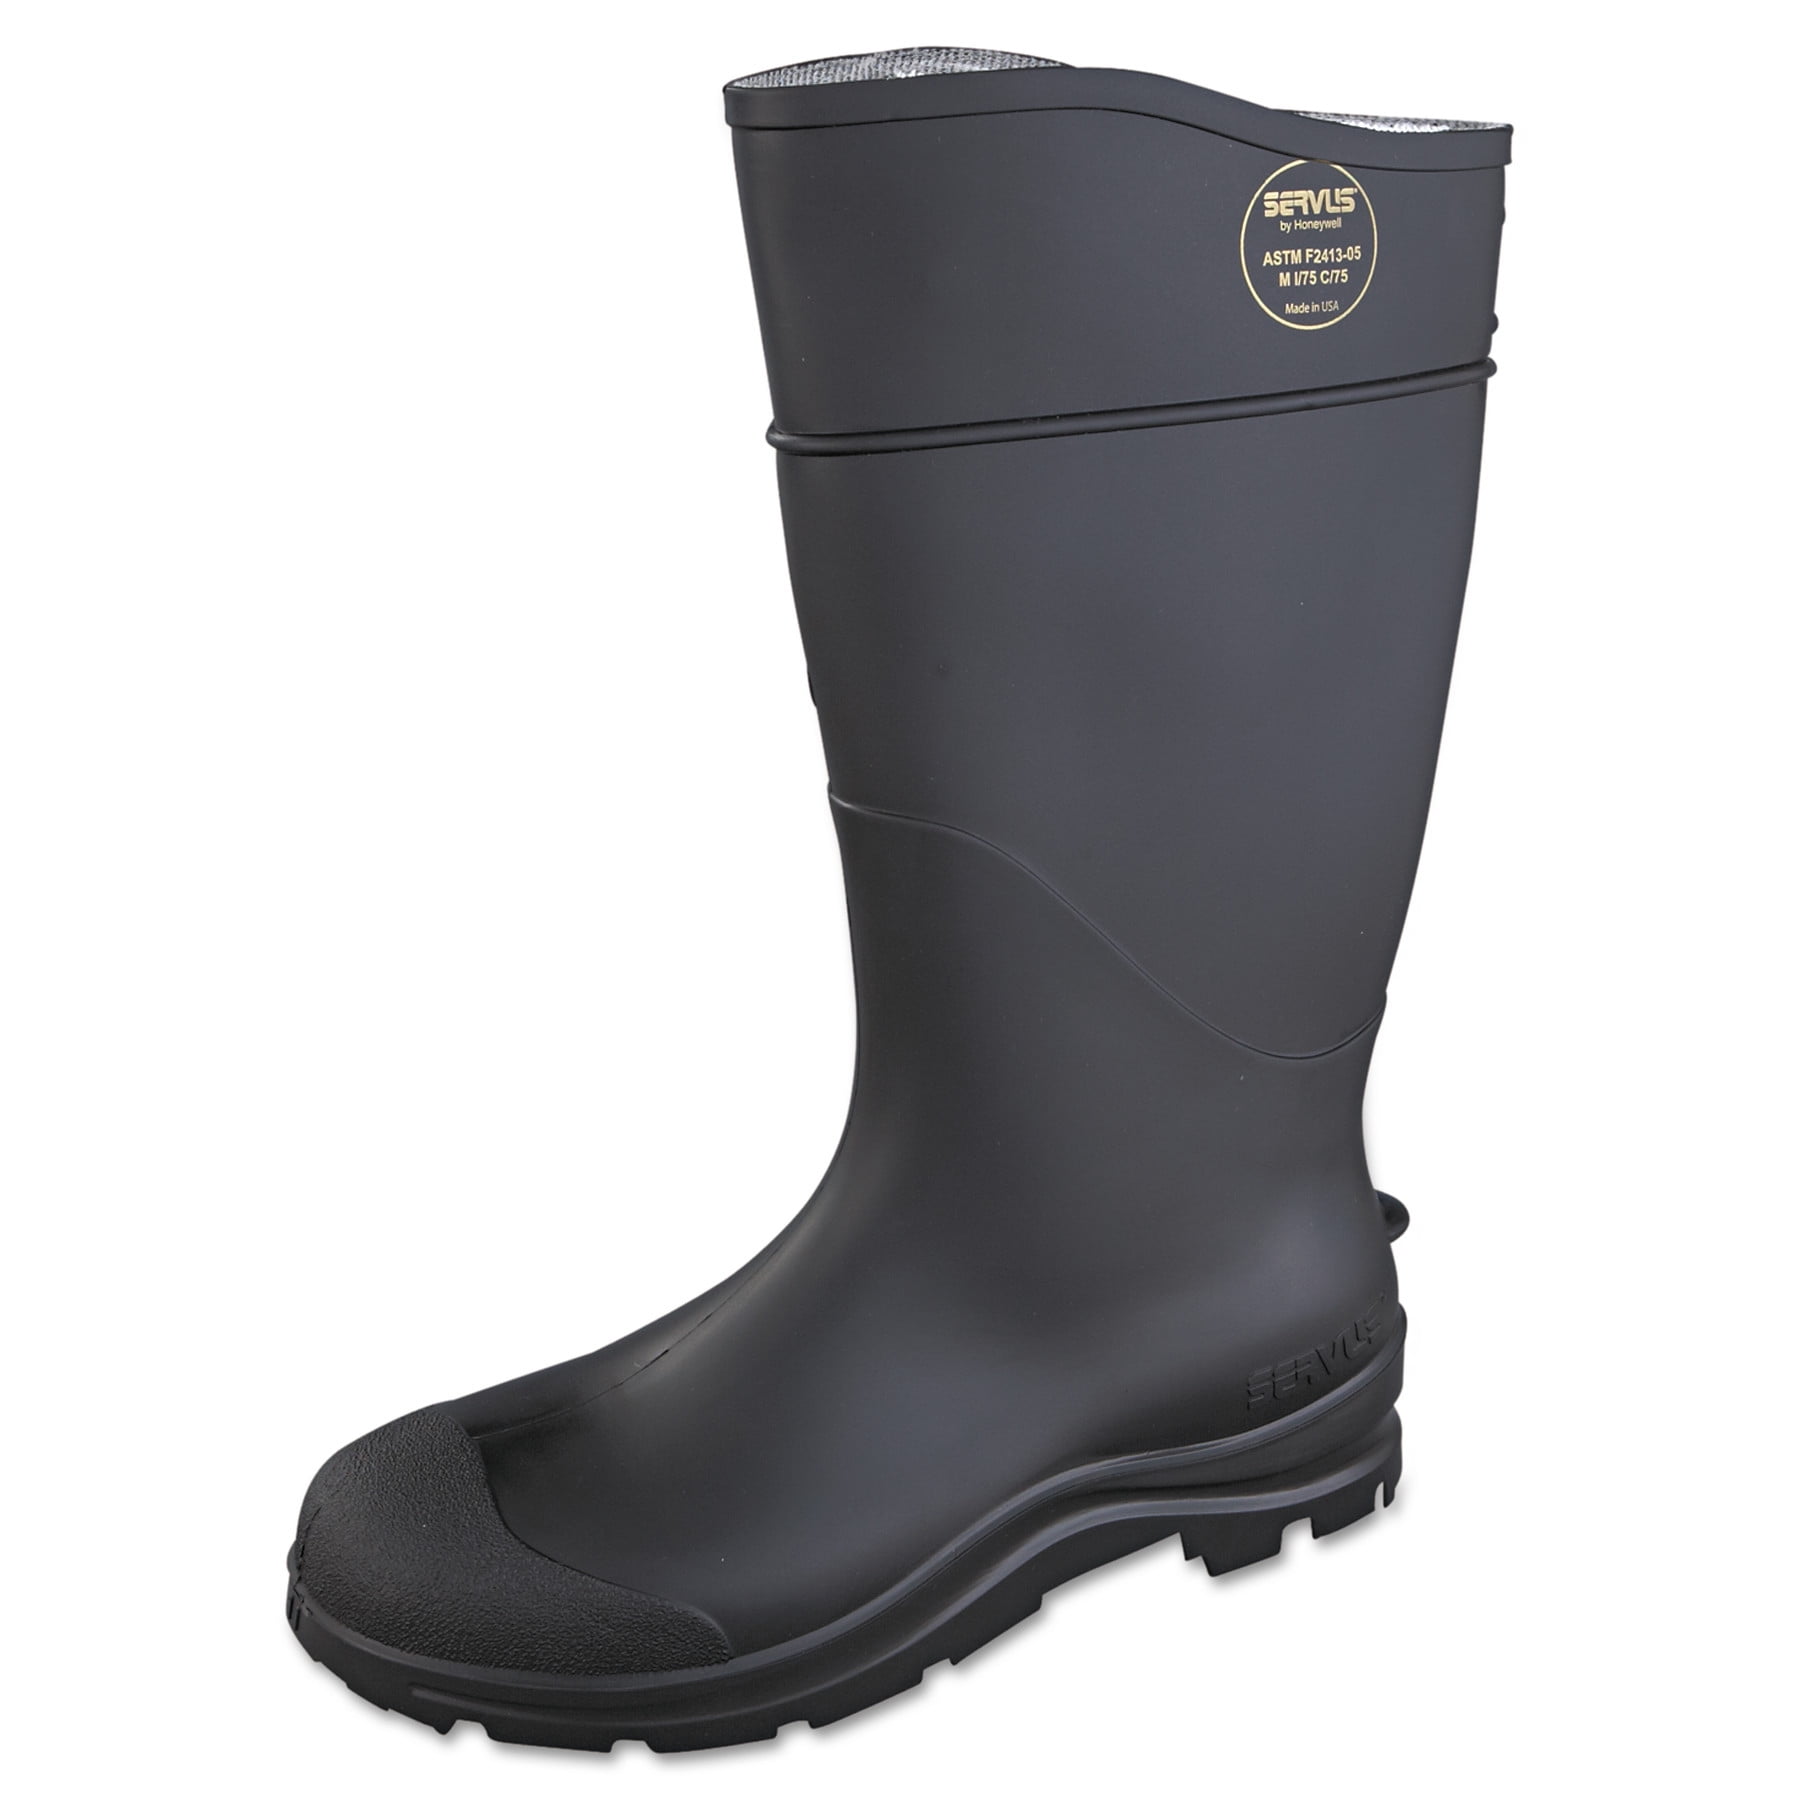 HONEYWELL SERVUS 75109/12 Knee Boots,Sz 12,15" H,Black,Stl 